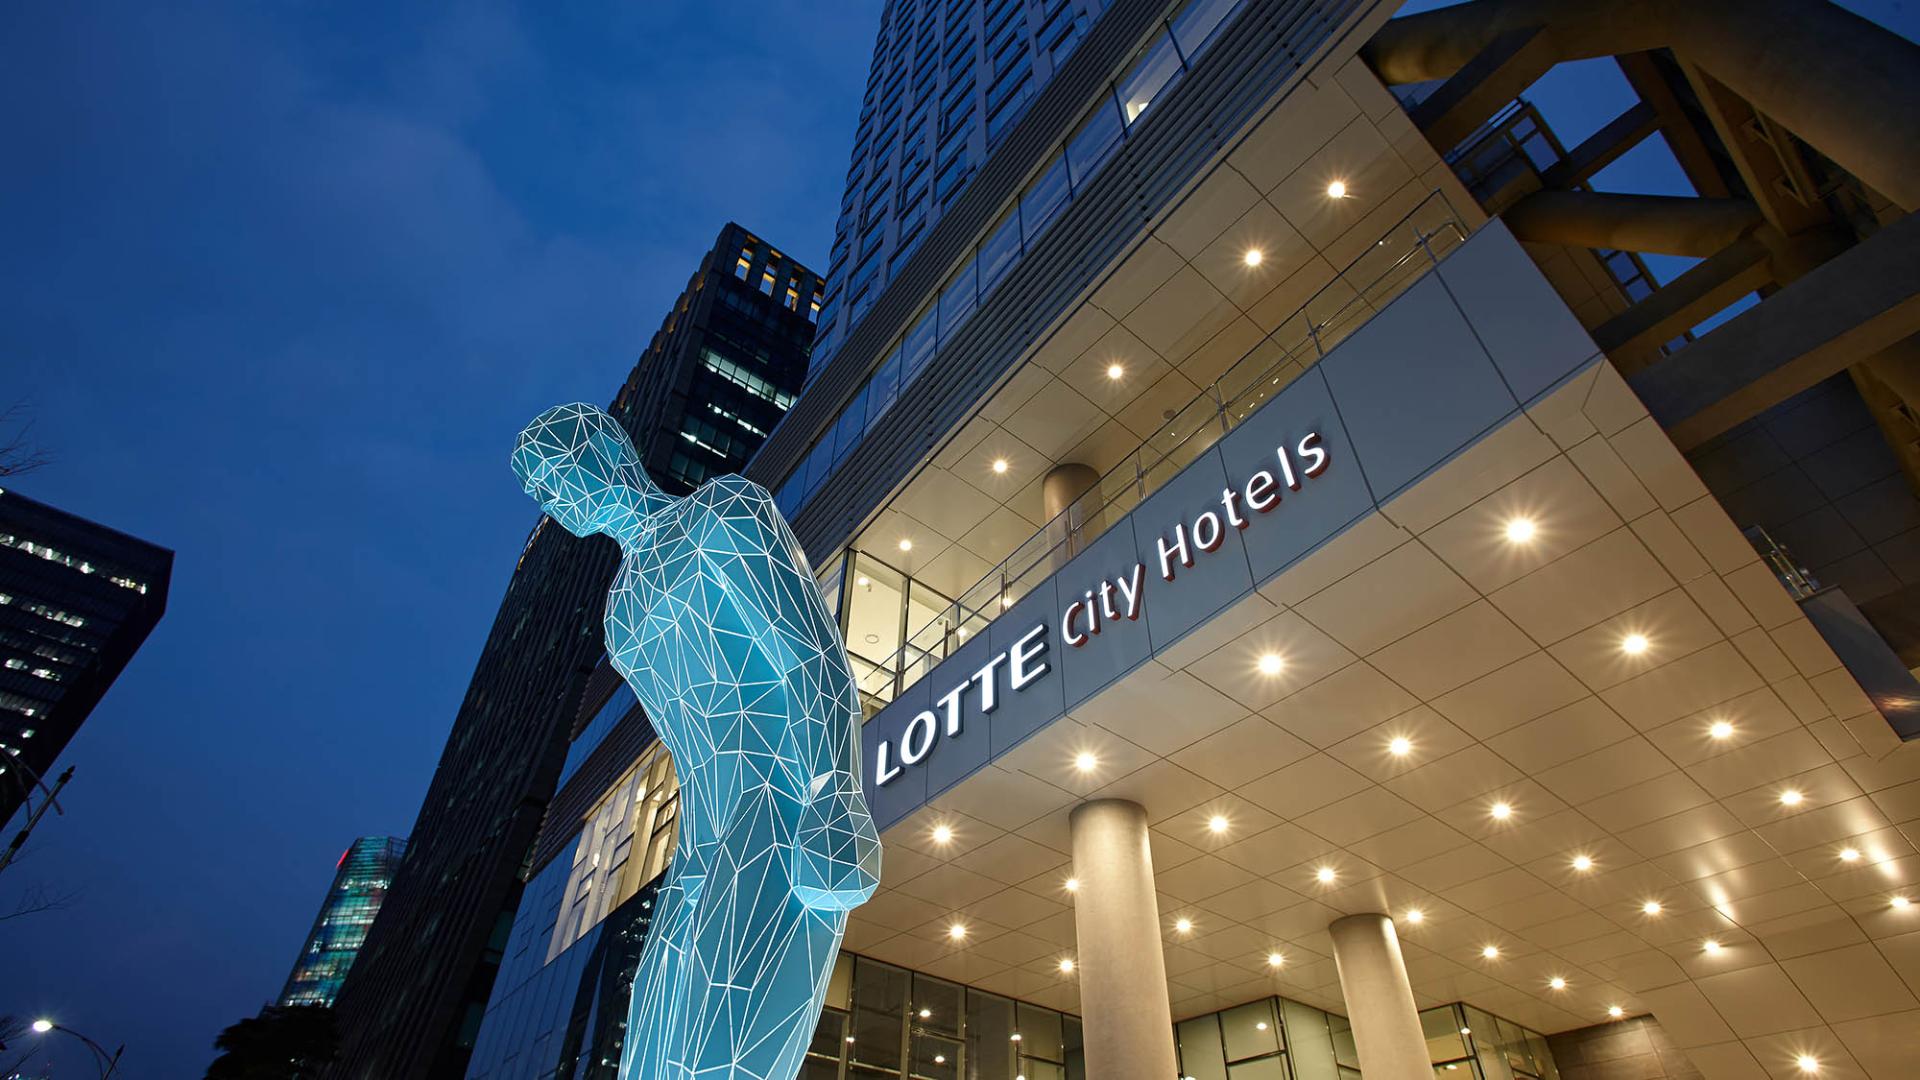 Lotte City Hotel Myeongdong-Main